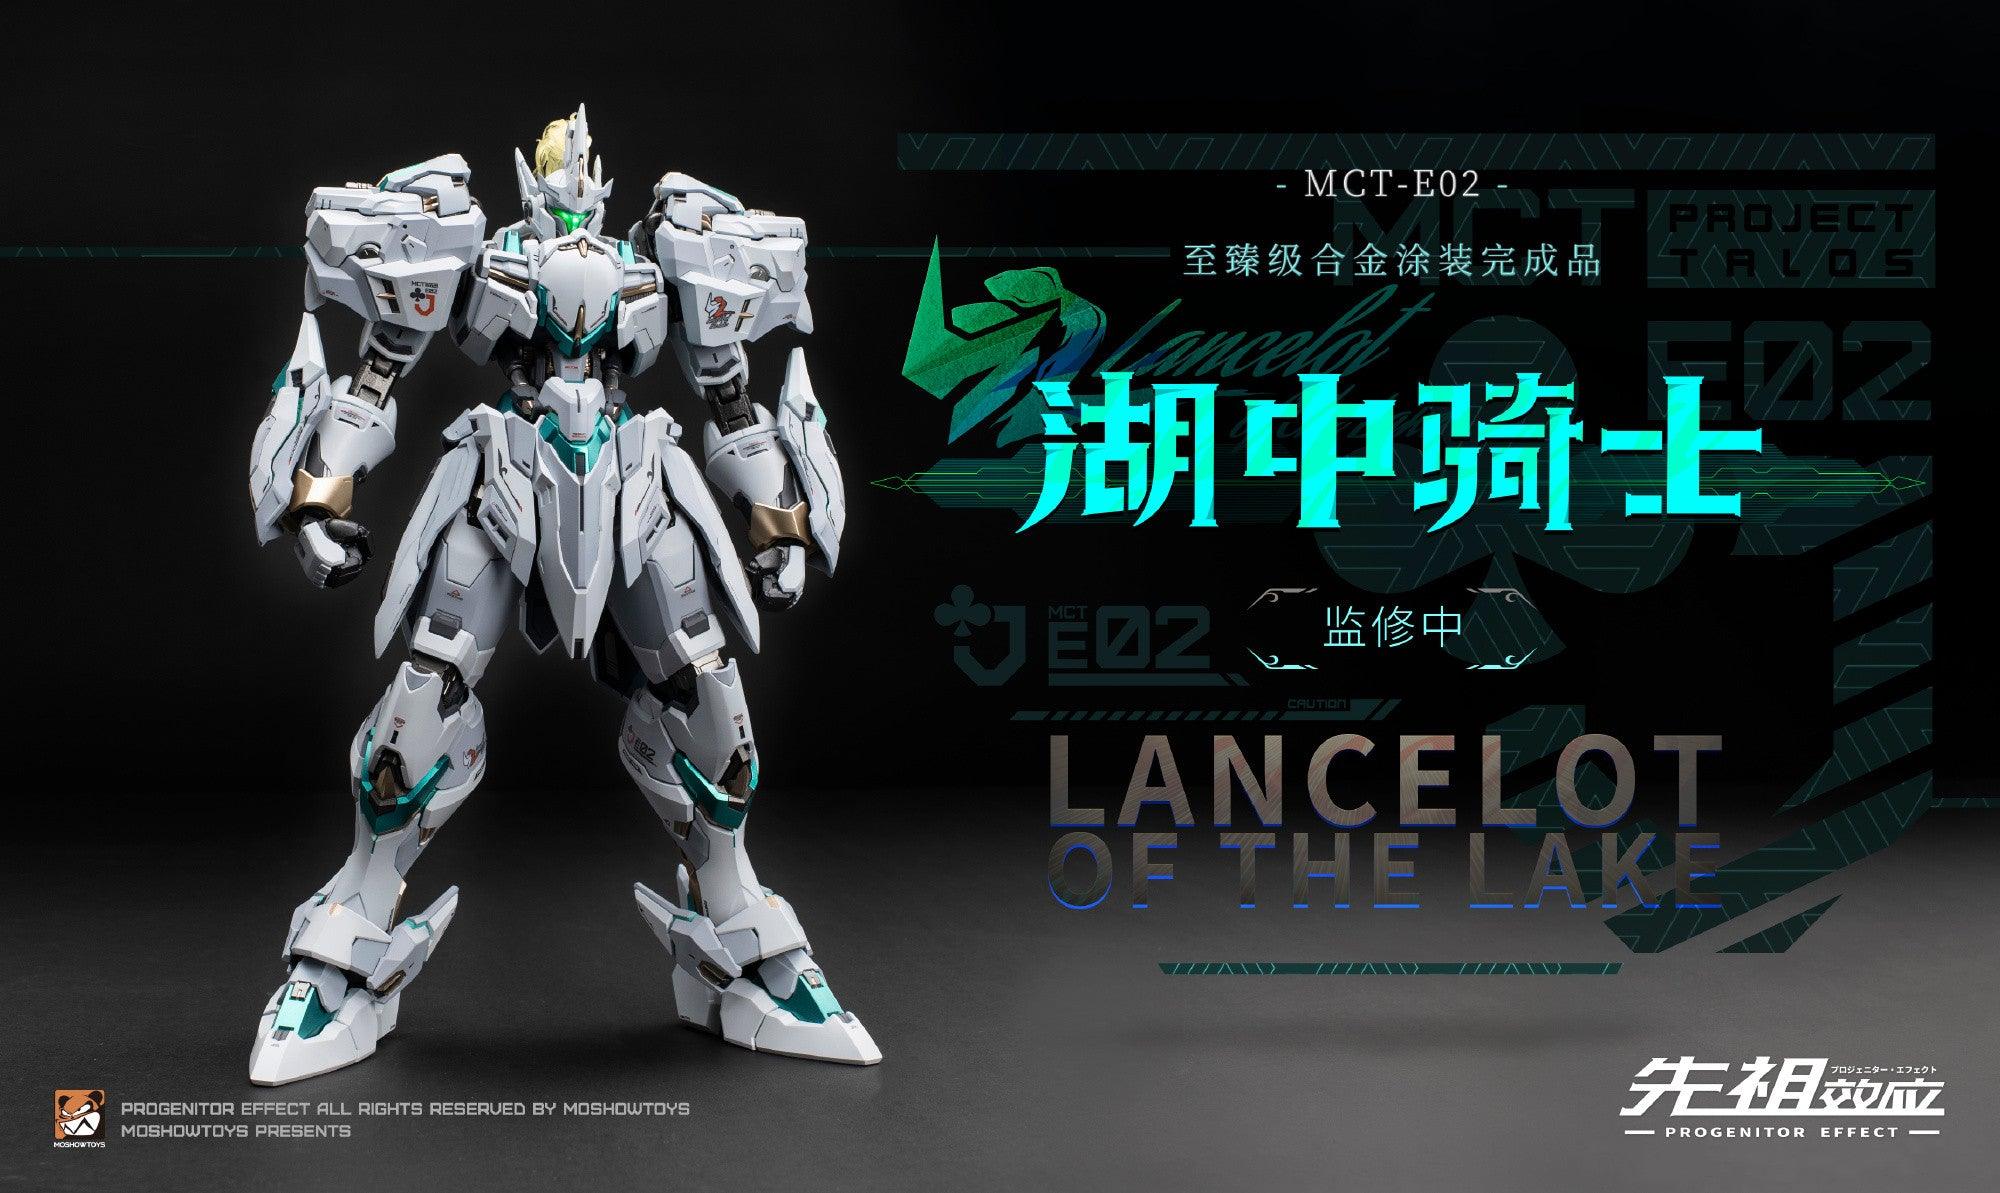 Moshow - MCT-E02 Lancelot of the Lake Advanced Type